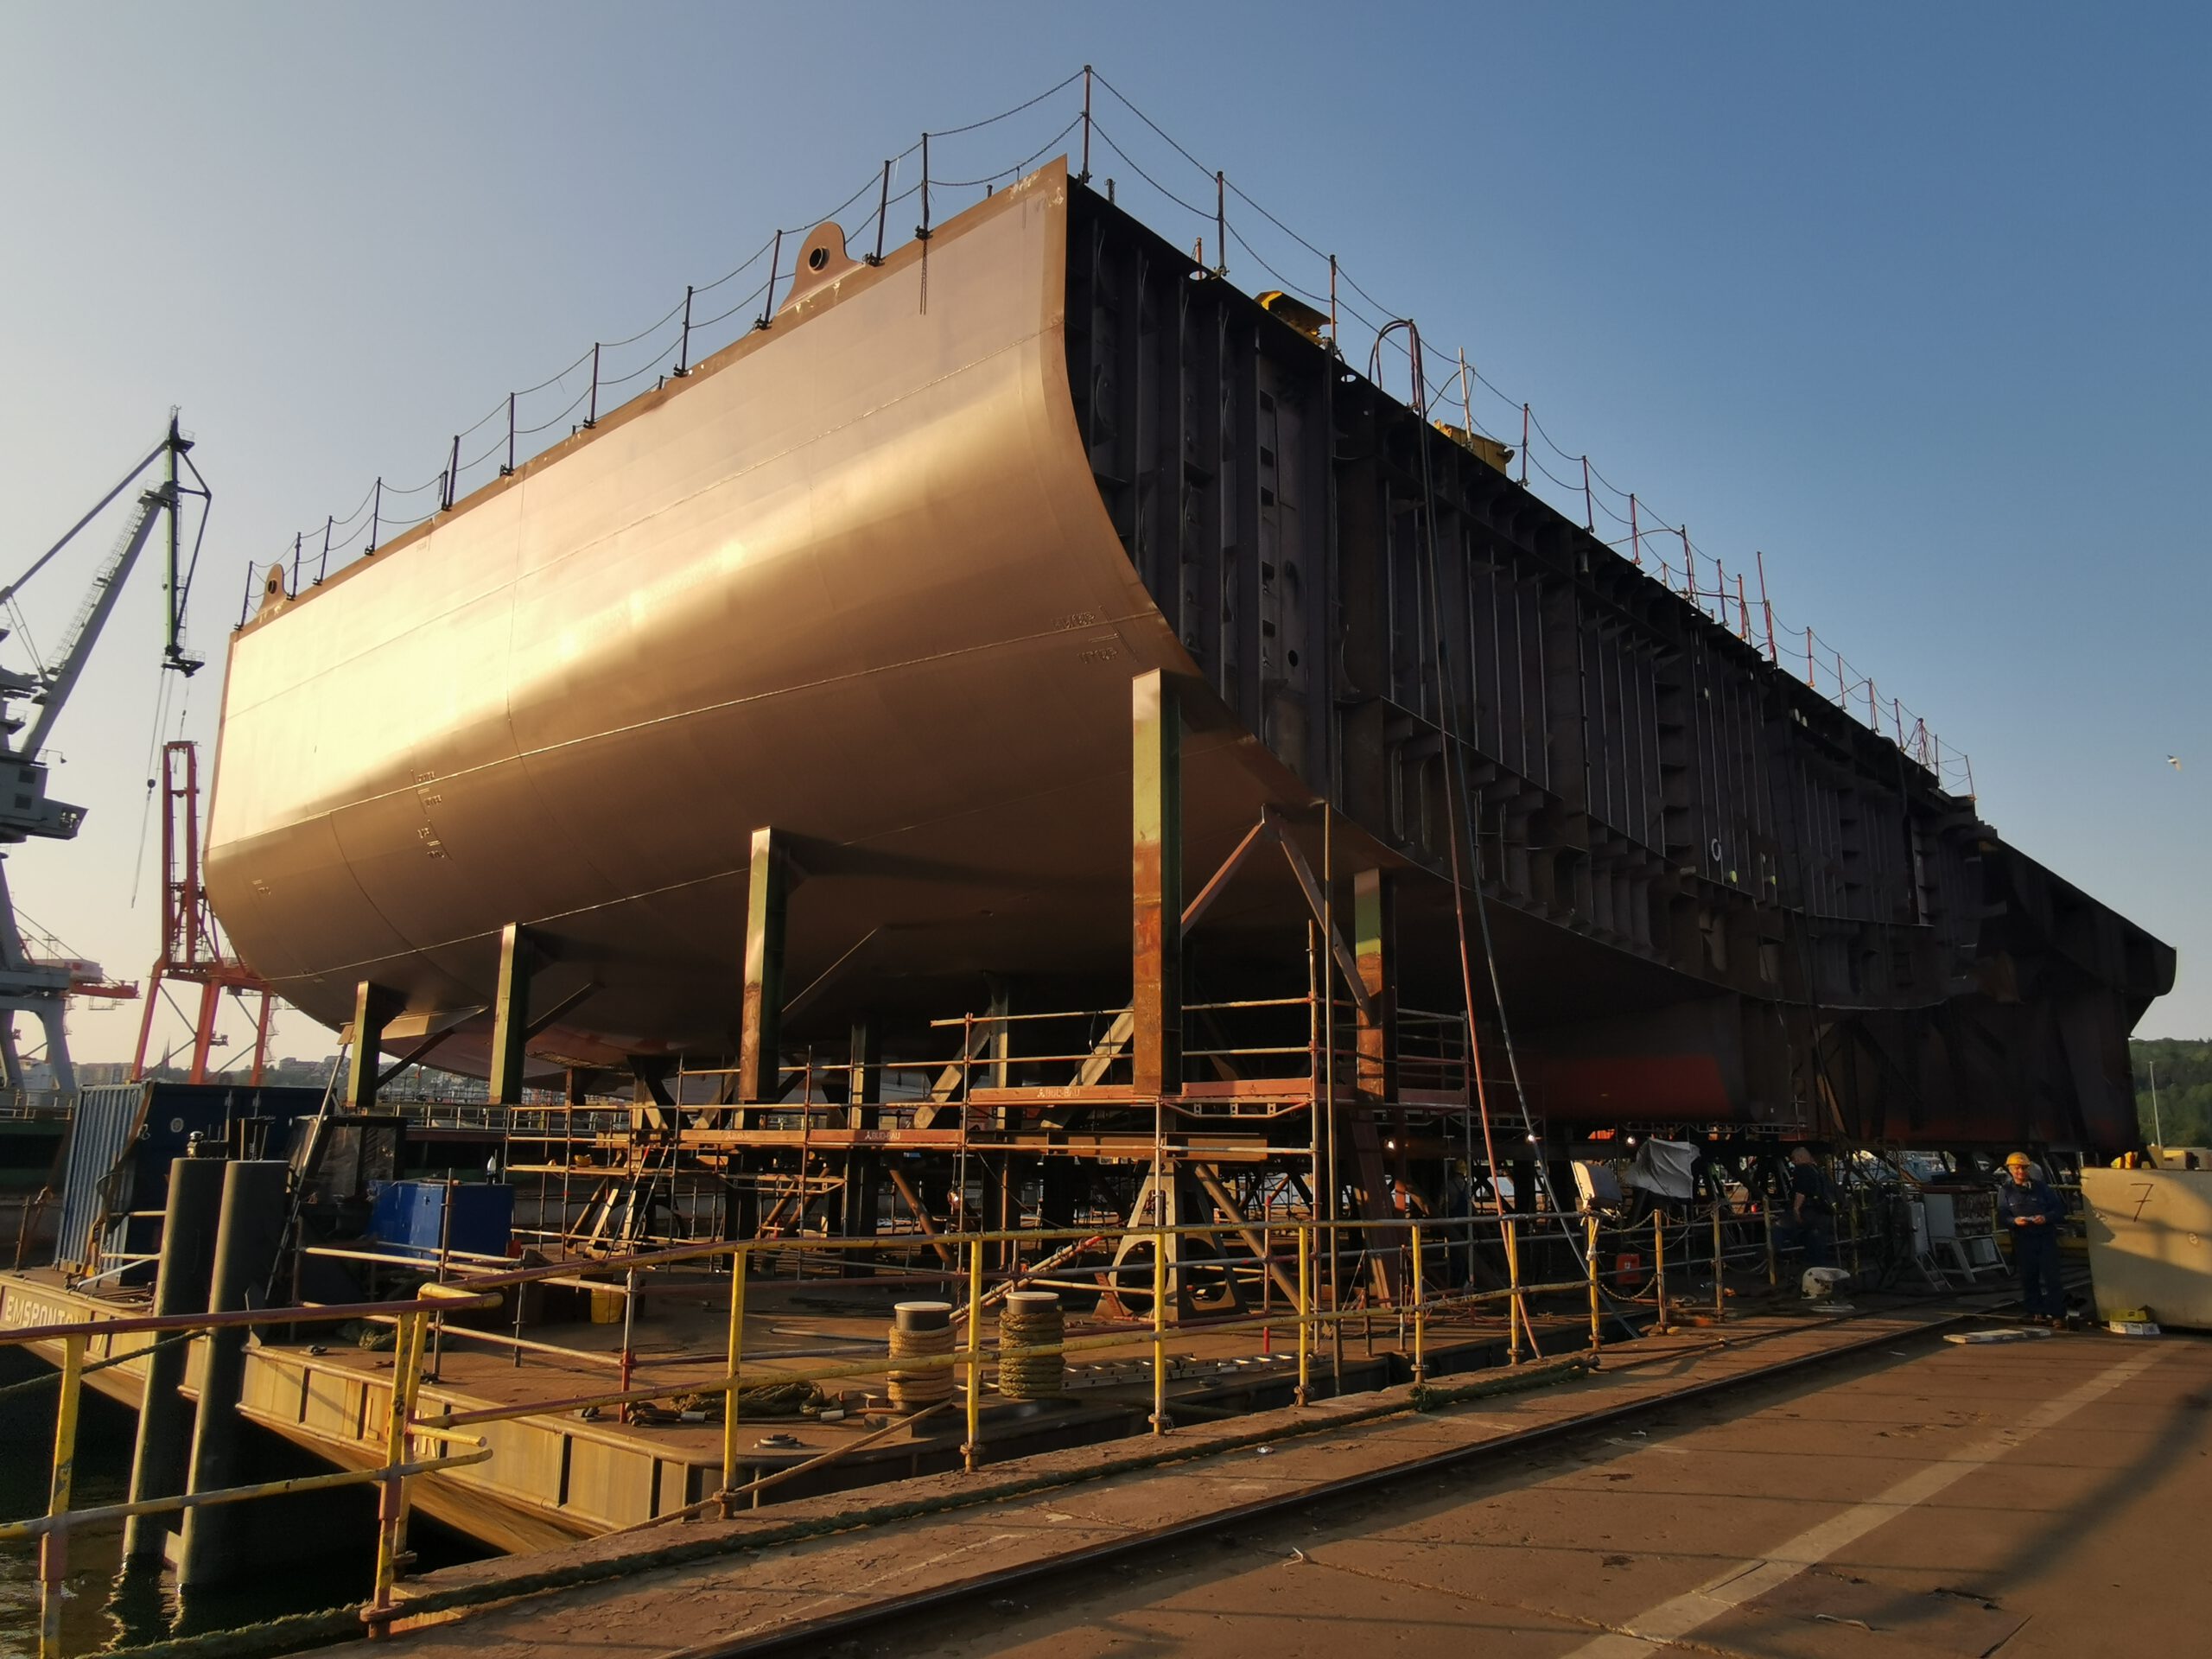 Ship hull as a shell construction on a pontoon